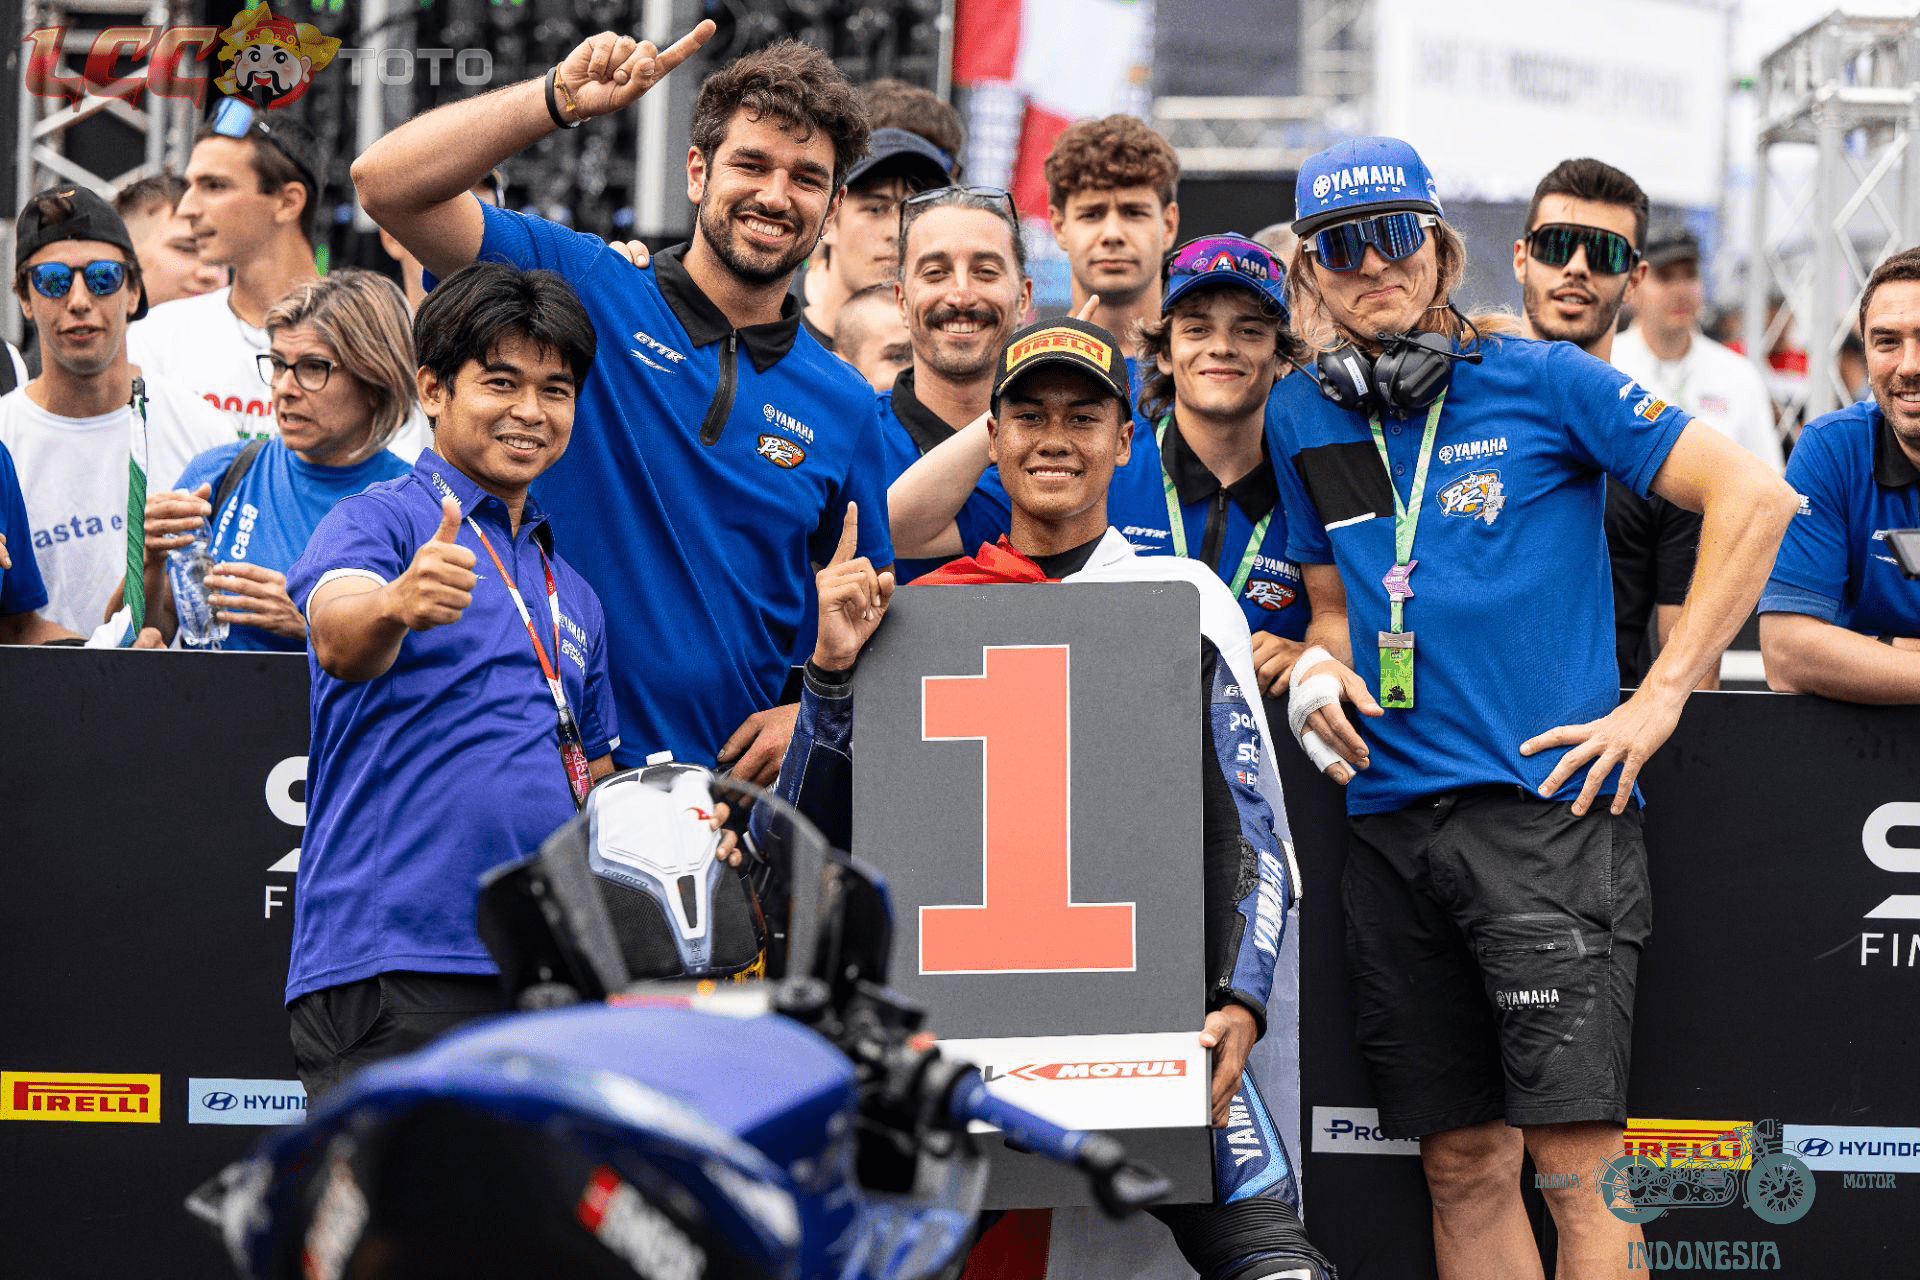 Kejutan Ajaib: Aldi Satya, Pembalap Indonesia, Menjadi Juara di Race 1 Yamaha R3 bLU cRU Italia dengan Kemenangan yang Sekebon